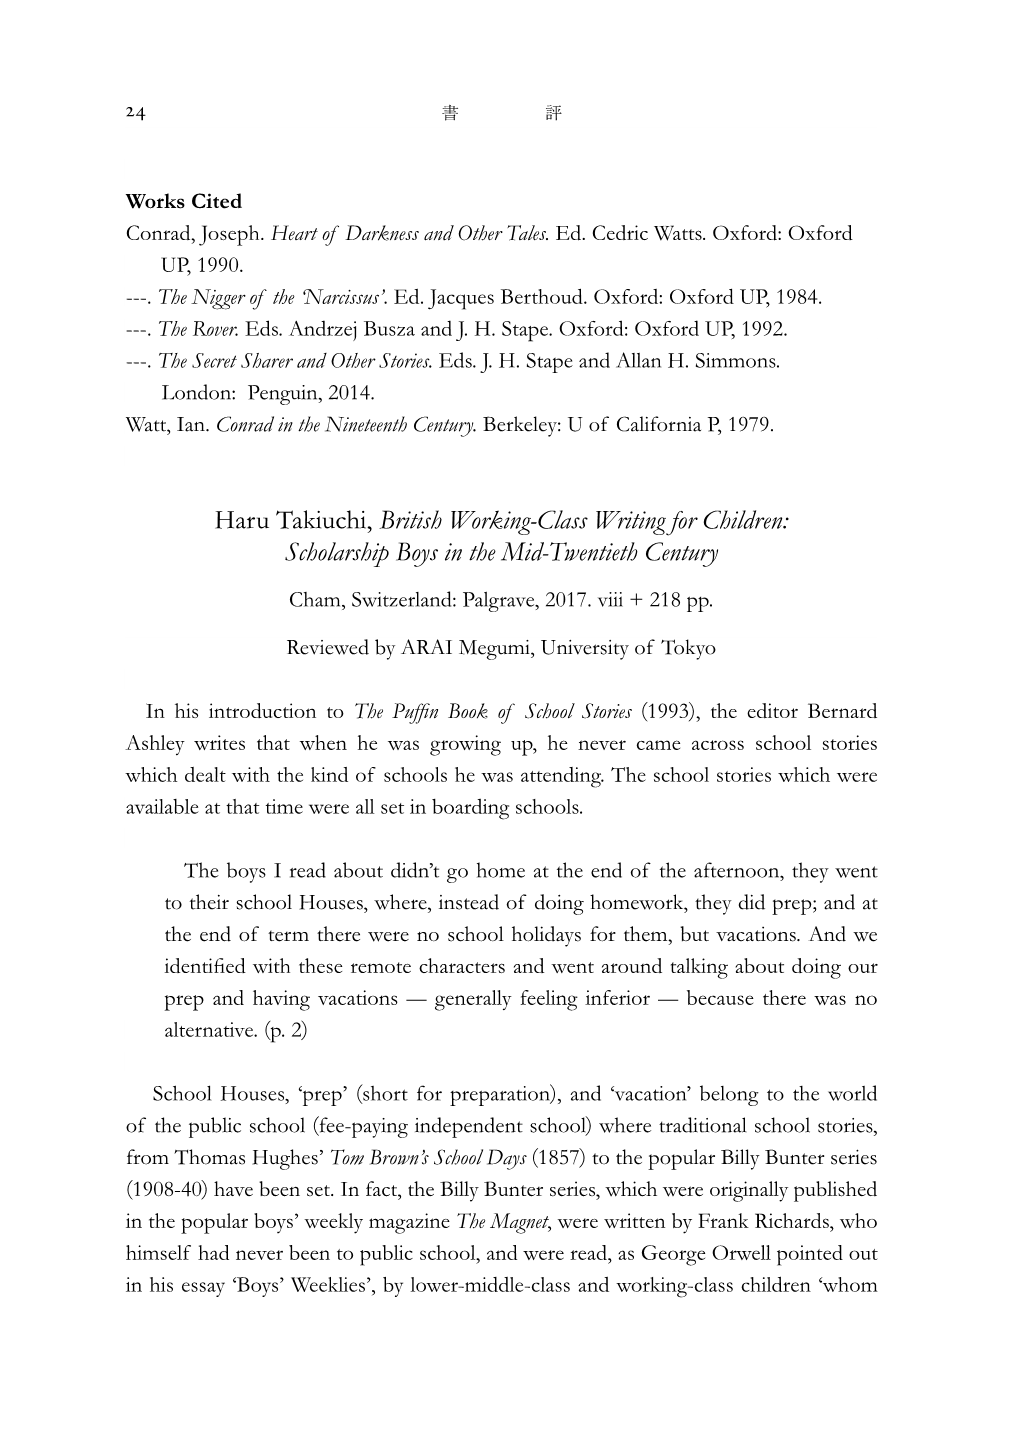 Haru Takiuchi, British Working-Class Writing for Children: Scholarship Boys in the Mid-Twentieth Century